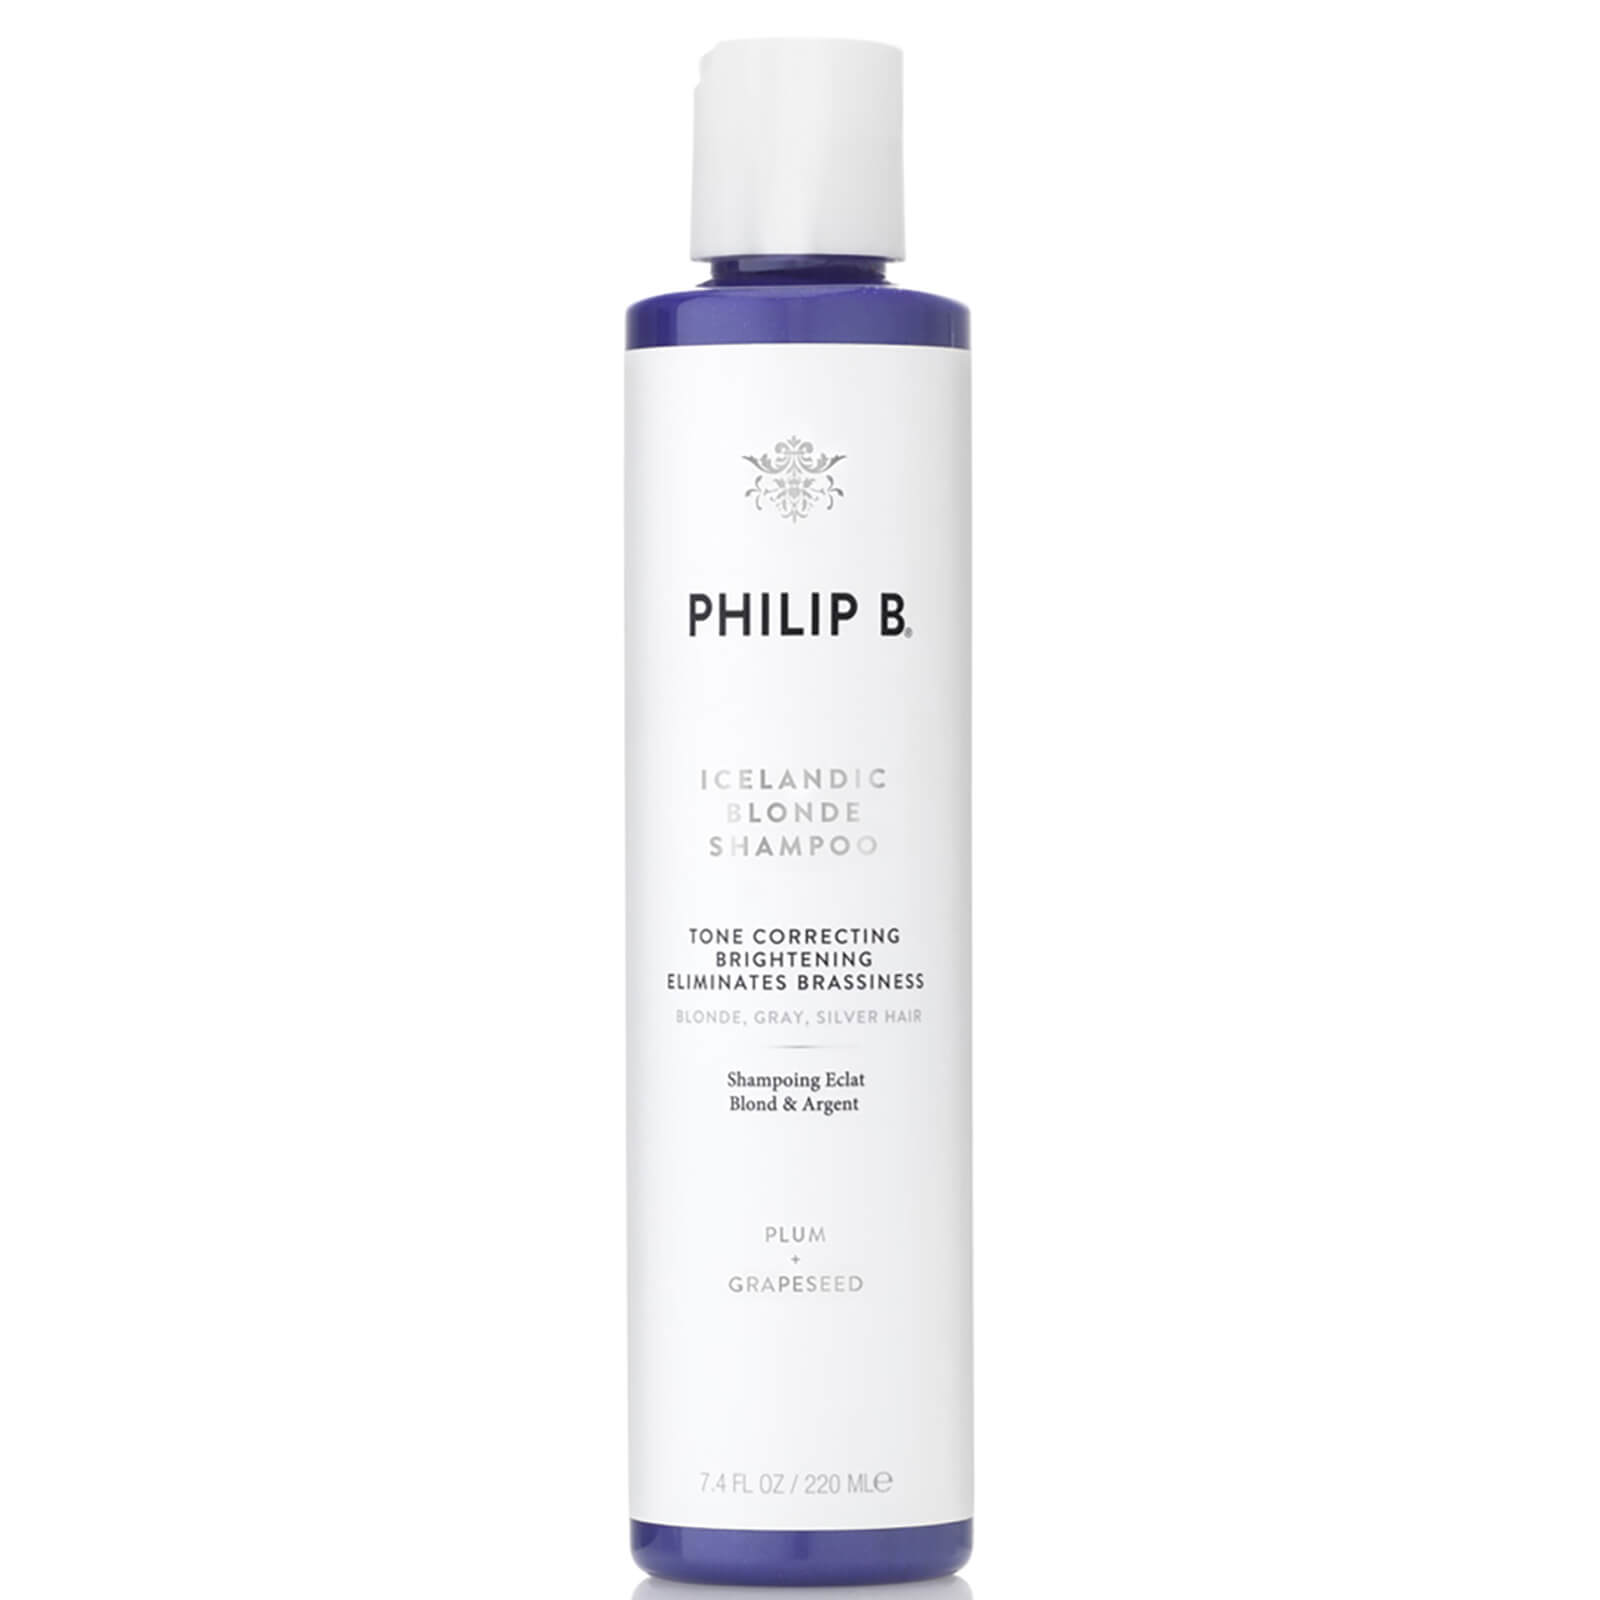 Philip B Icelandic Blonde Shampoo 7.4 fl oz /220 ml